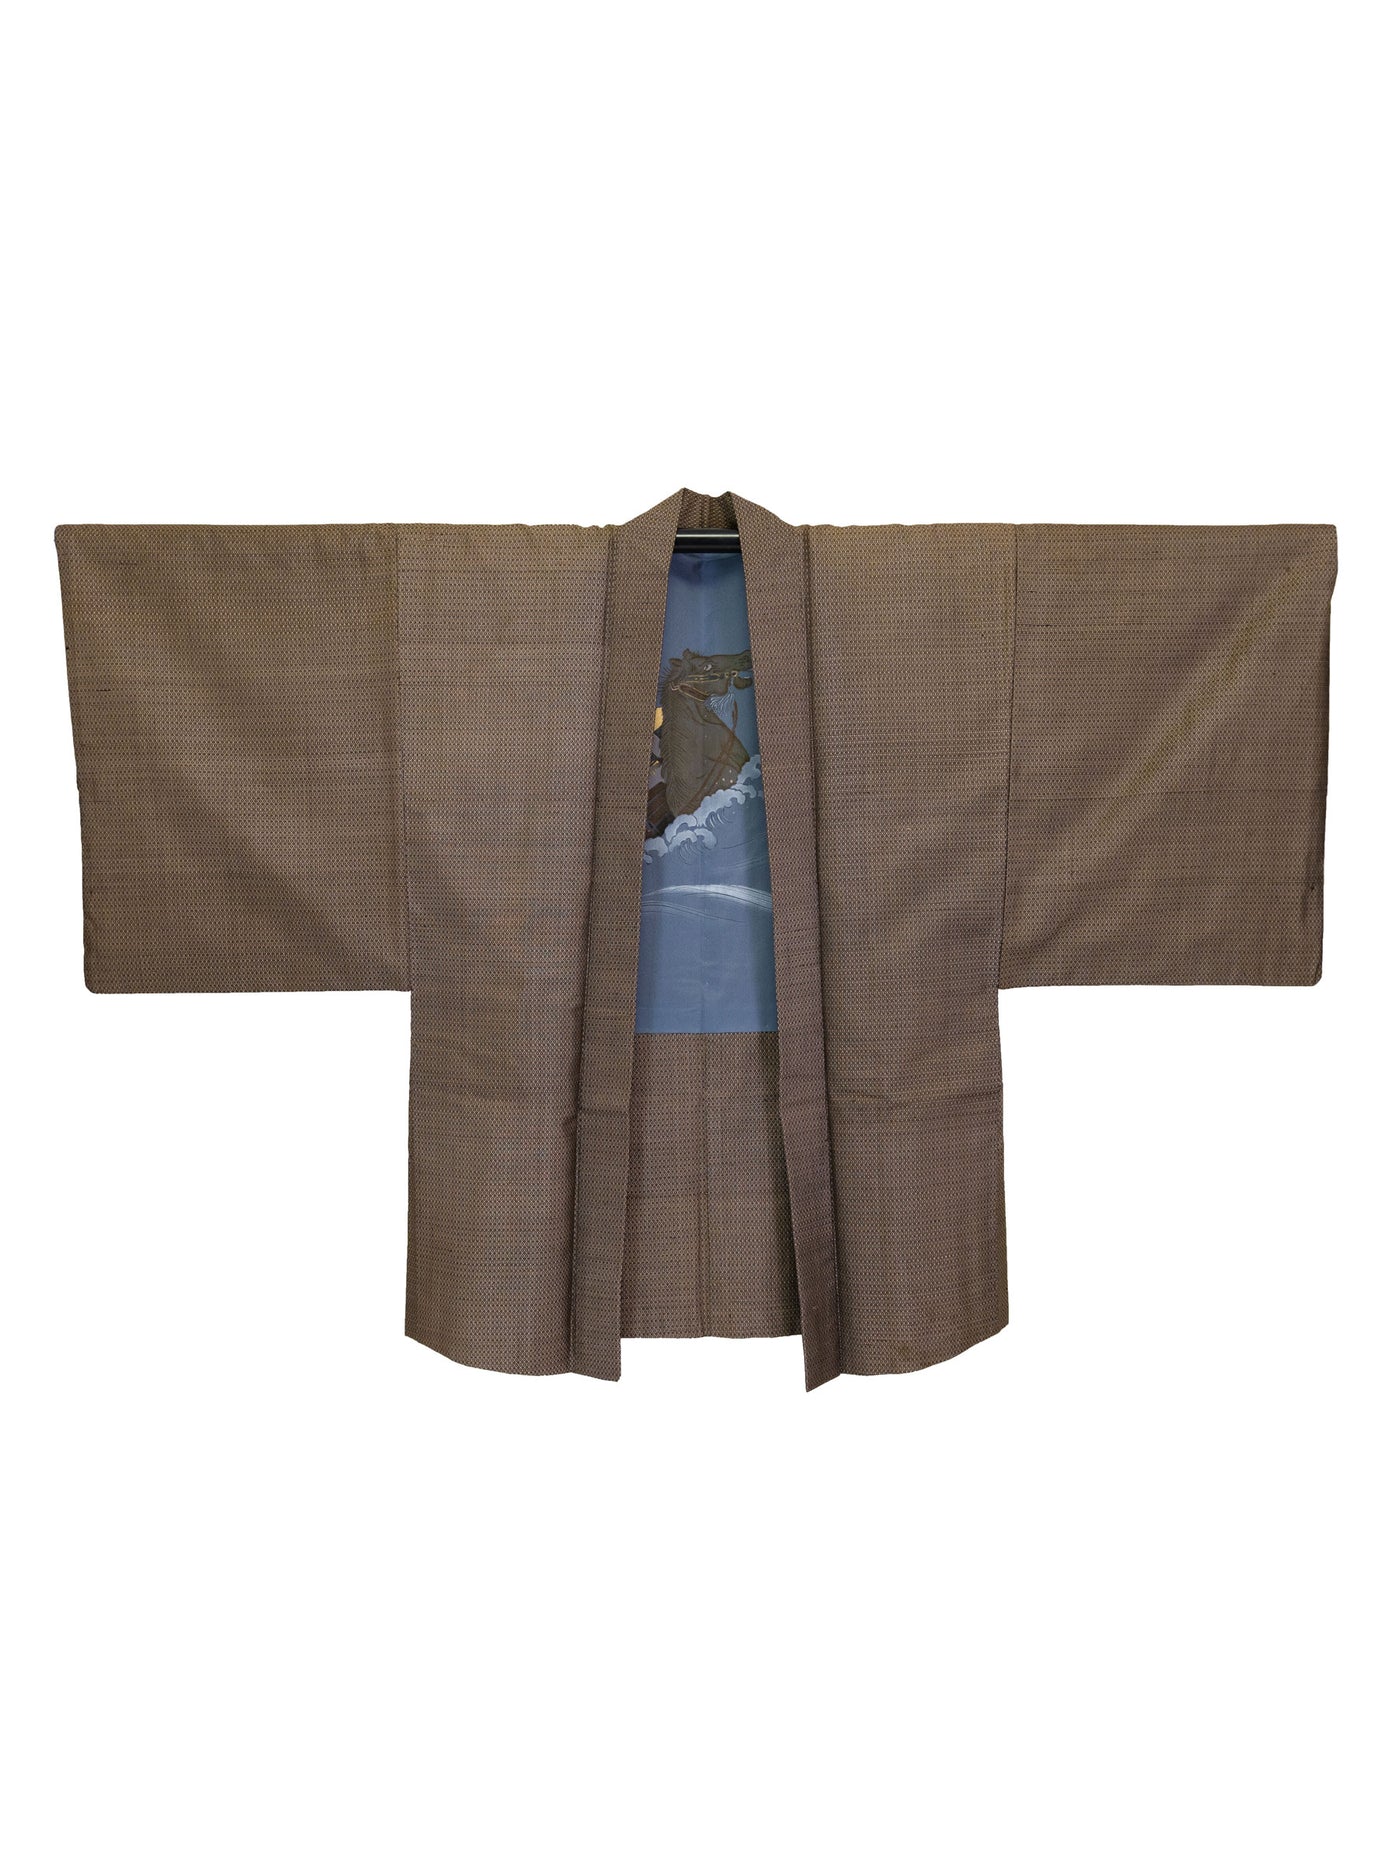 Veste Haori Vintage Samourai pour Homme